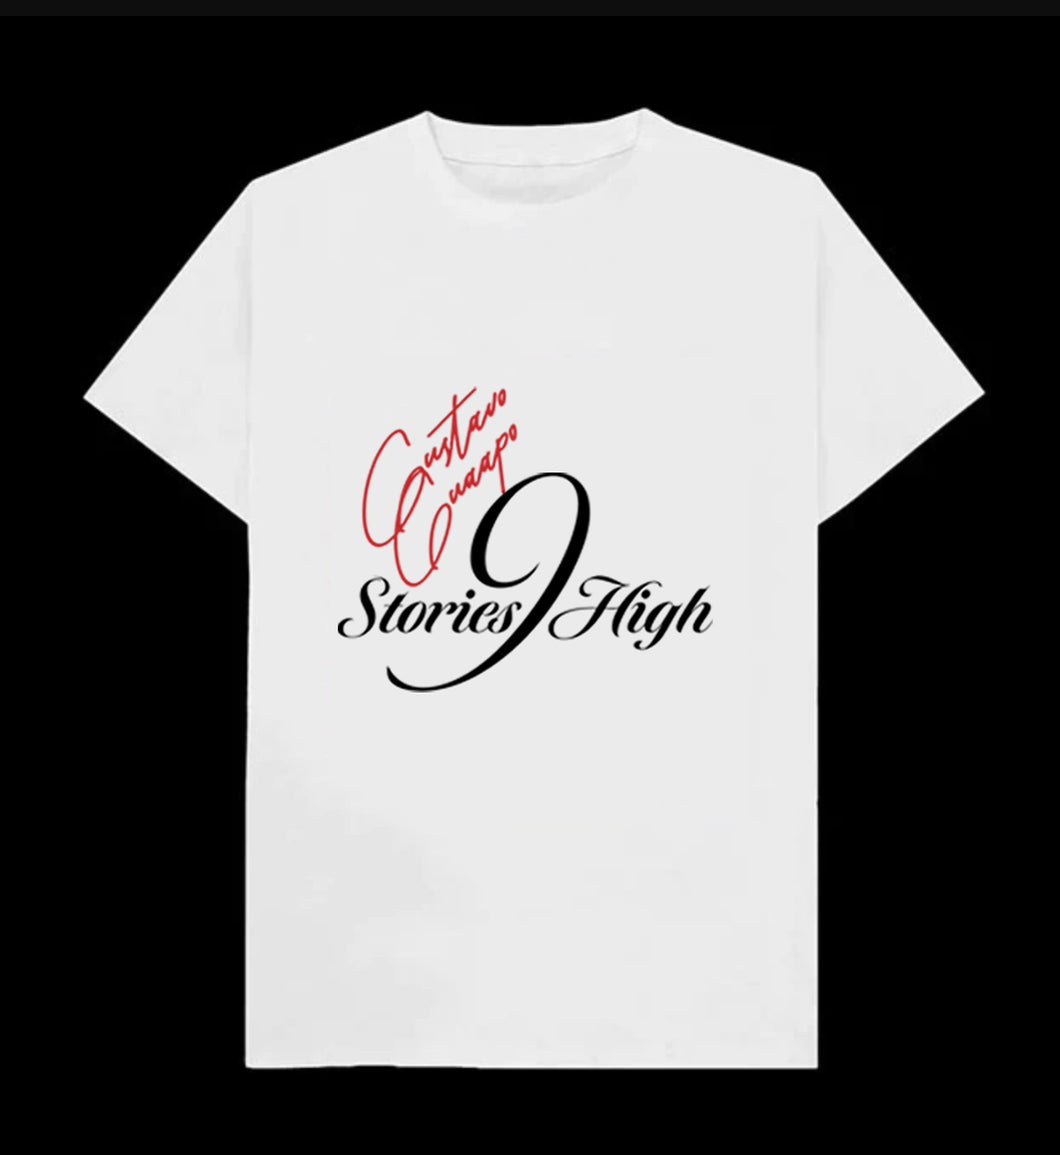 GG 9 Stories High T-Shirt White